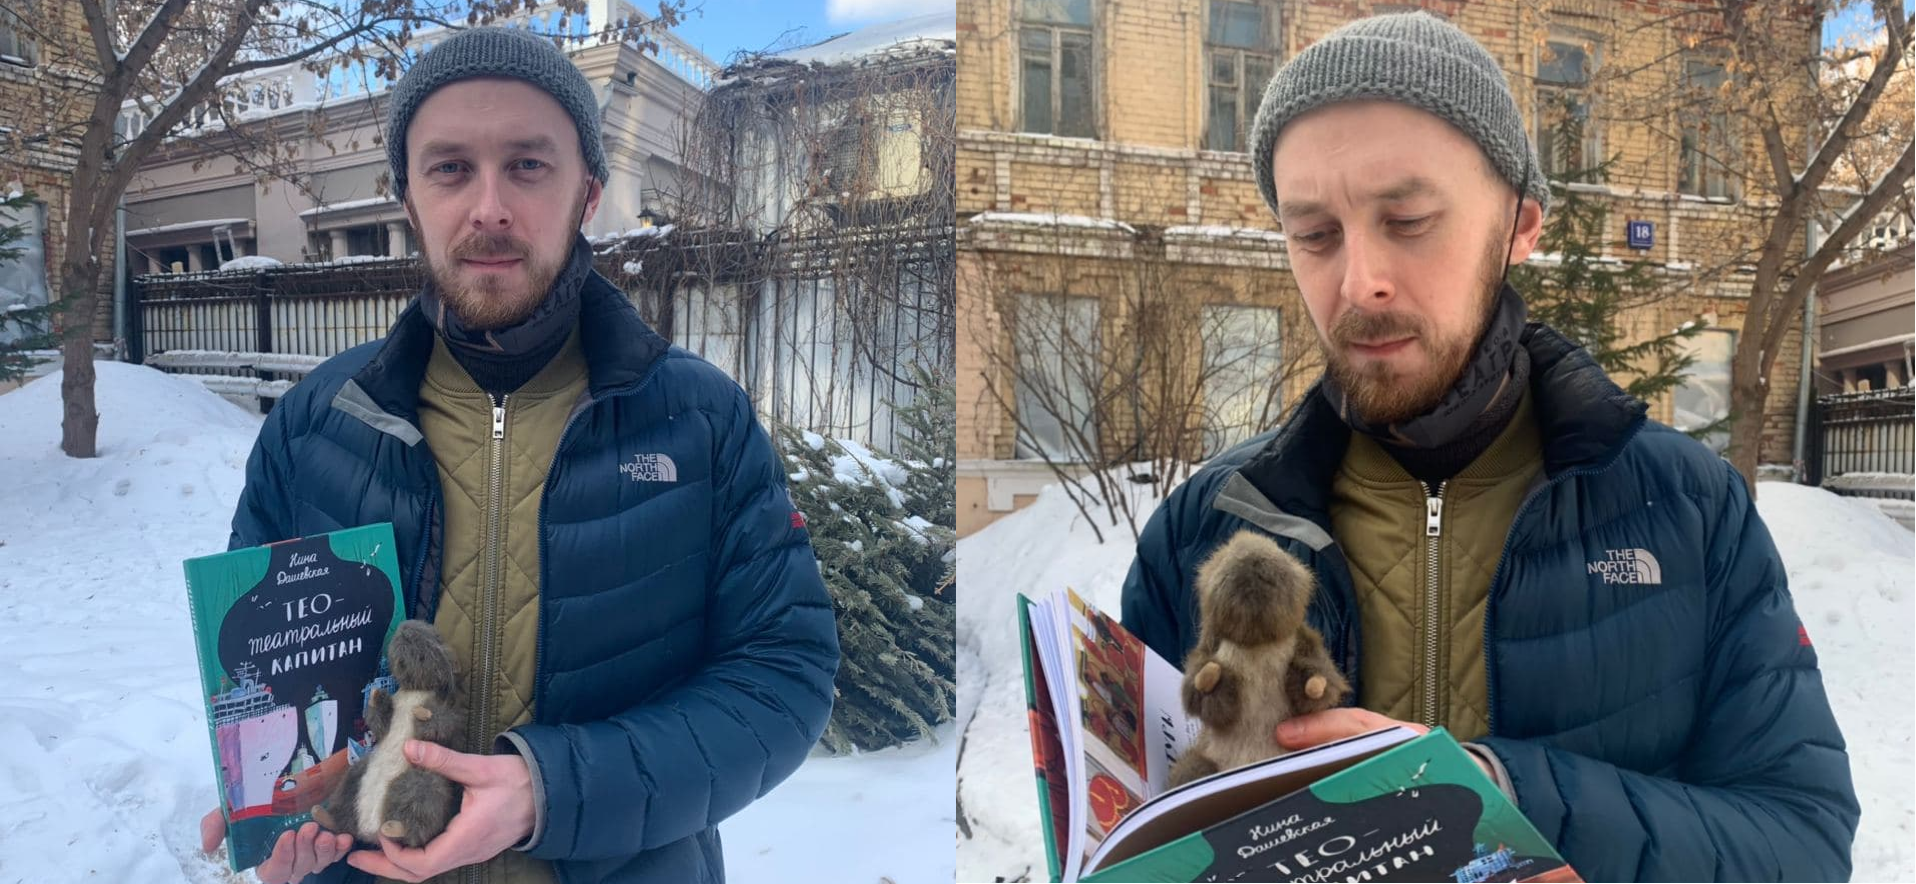 На фото - Иван Пачин, мышонок Тео и книга Нины Дашевской. Фото предоставлено организаторами.